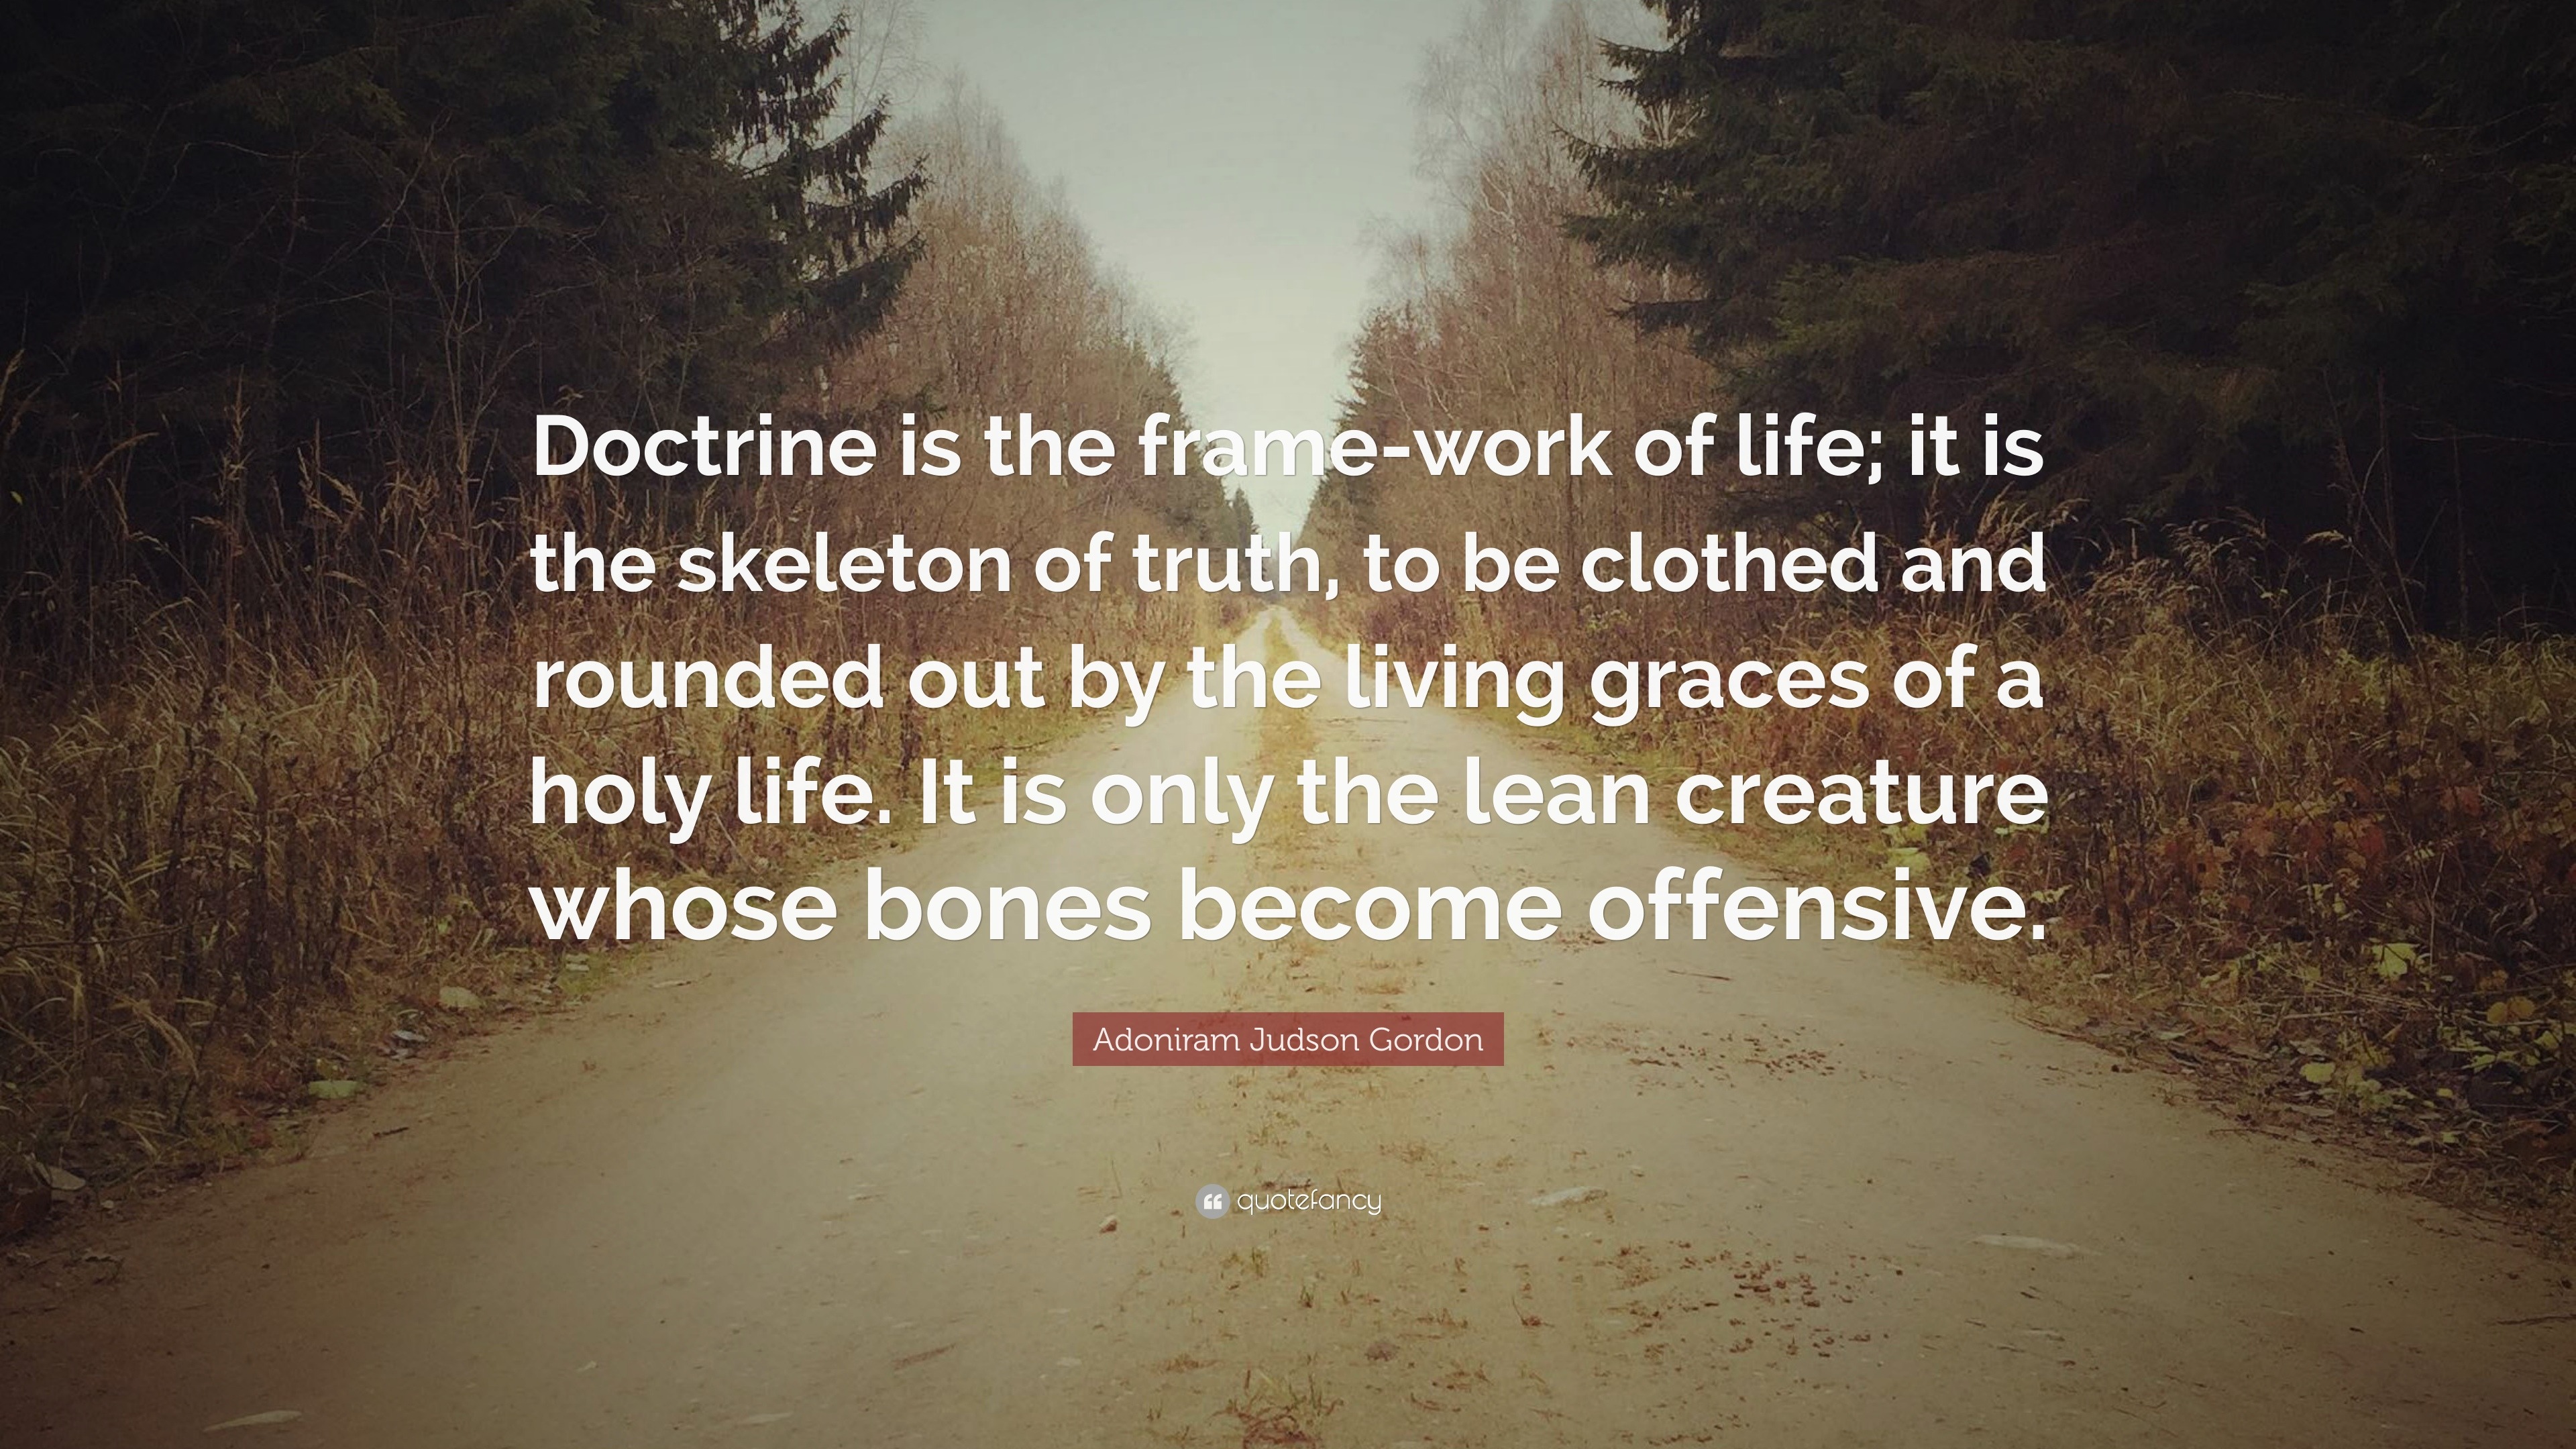 Adoniram Judson Gordon Quote “Doctrine is the frame work of life it